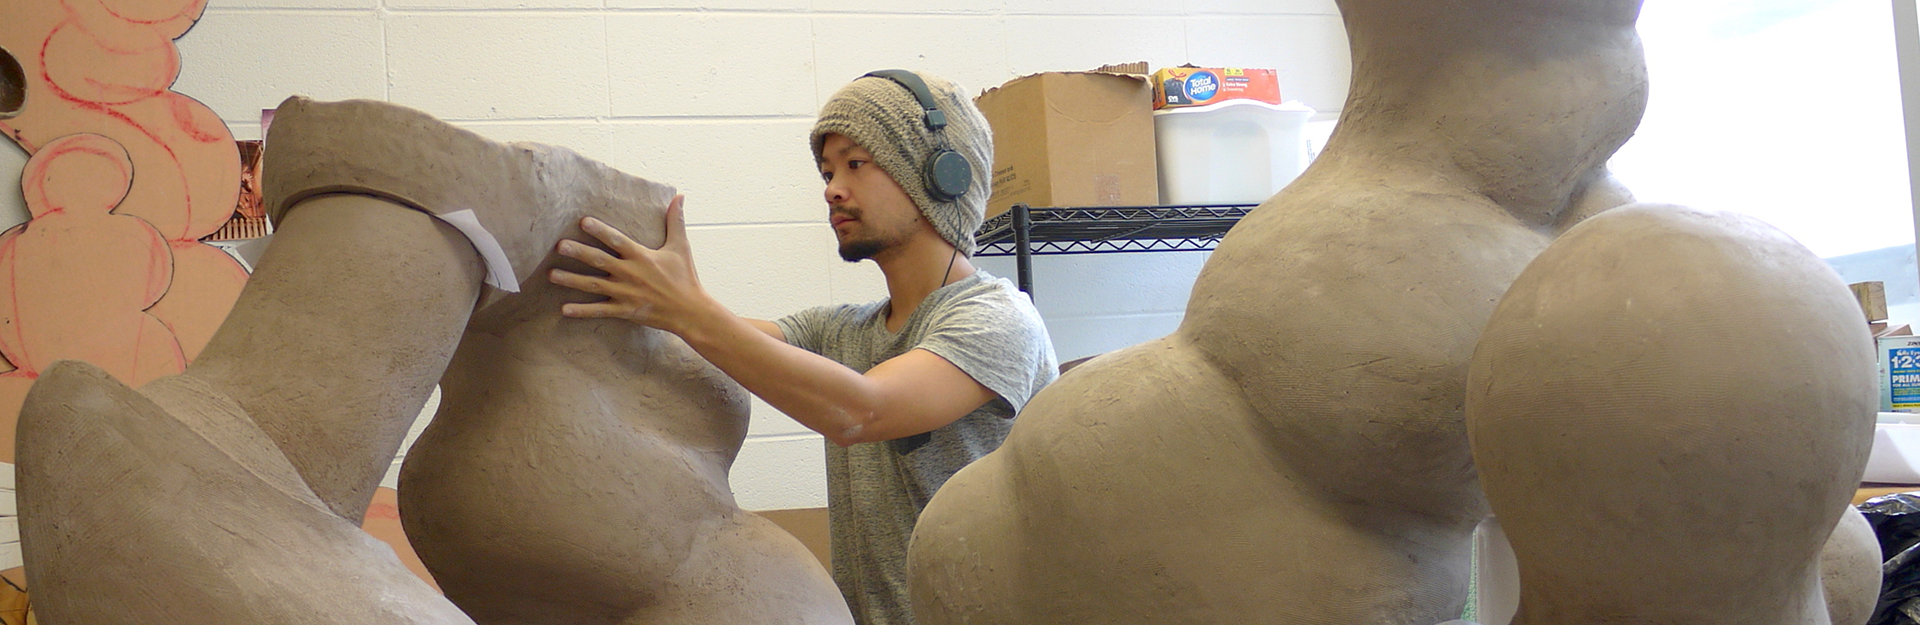 Art alumni places a large rounded sculpture